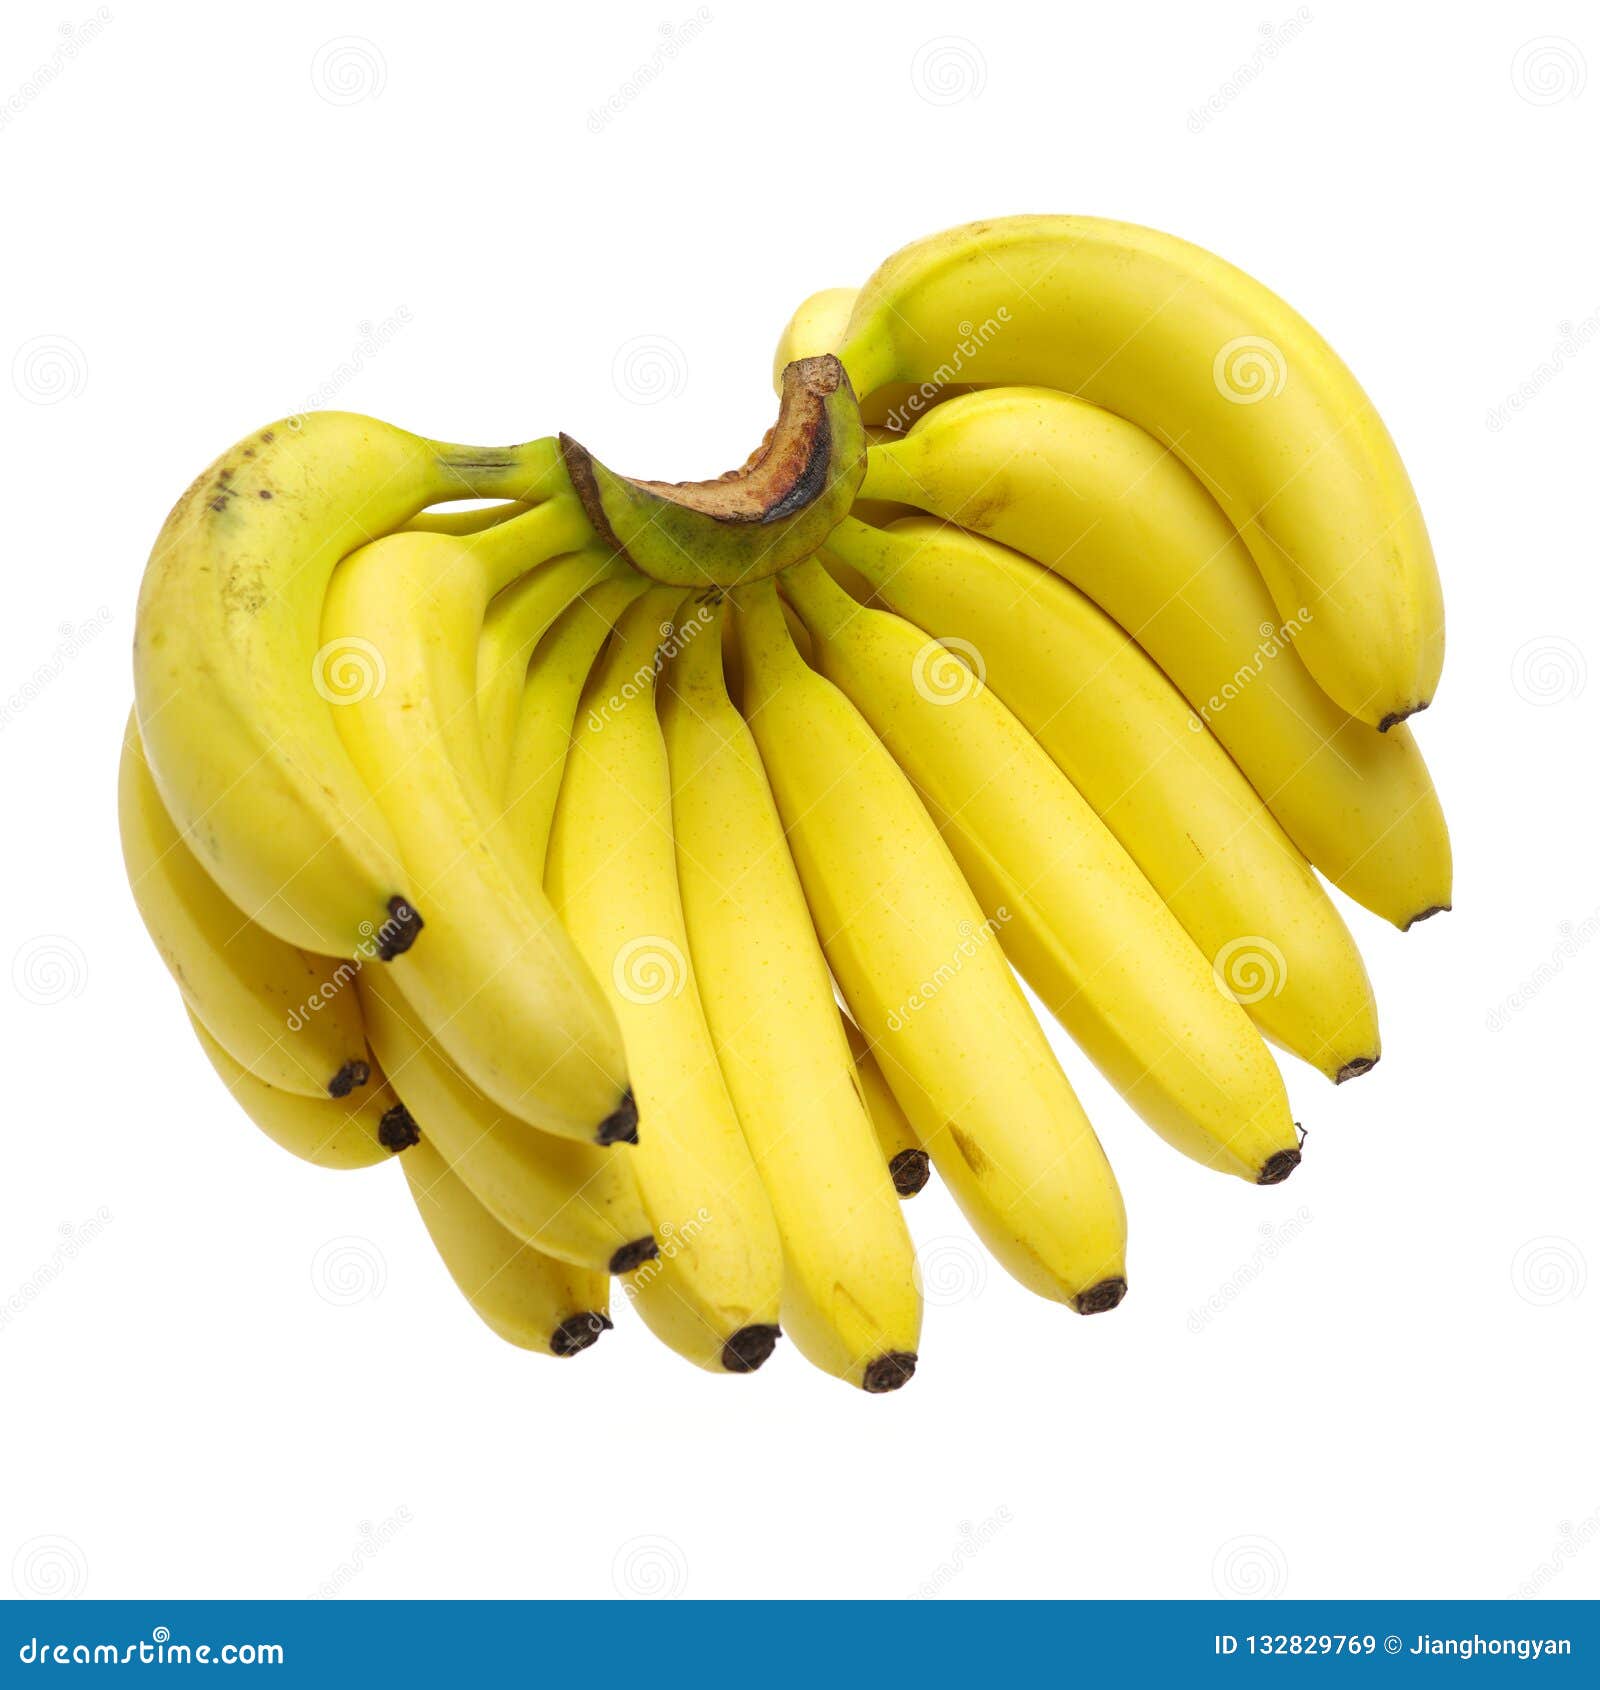 https://thumbs.dreamstime.com/z/banana-bunch-banana-bunch-isolated-white-background-132829769.jpg